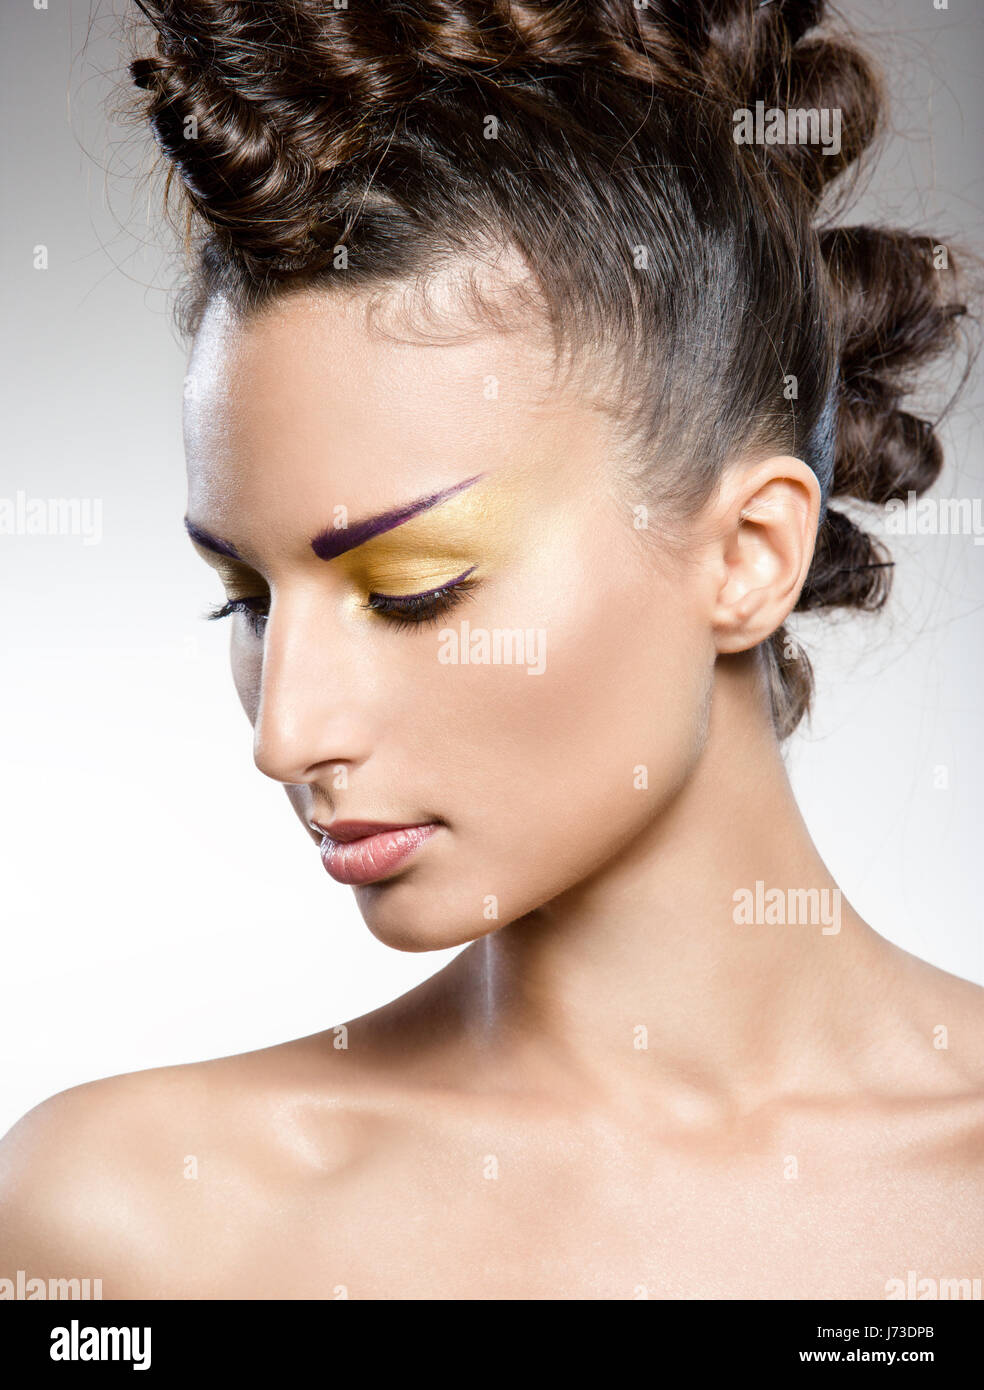 woman art portrait makeup photo model model hair woman beautiful beauteously Stock Photo